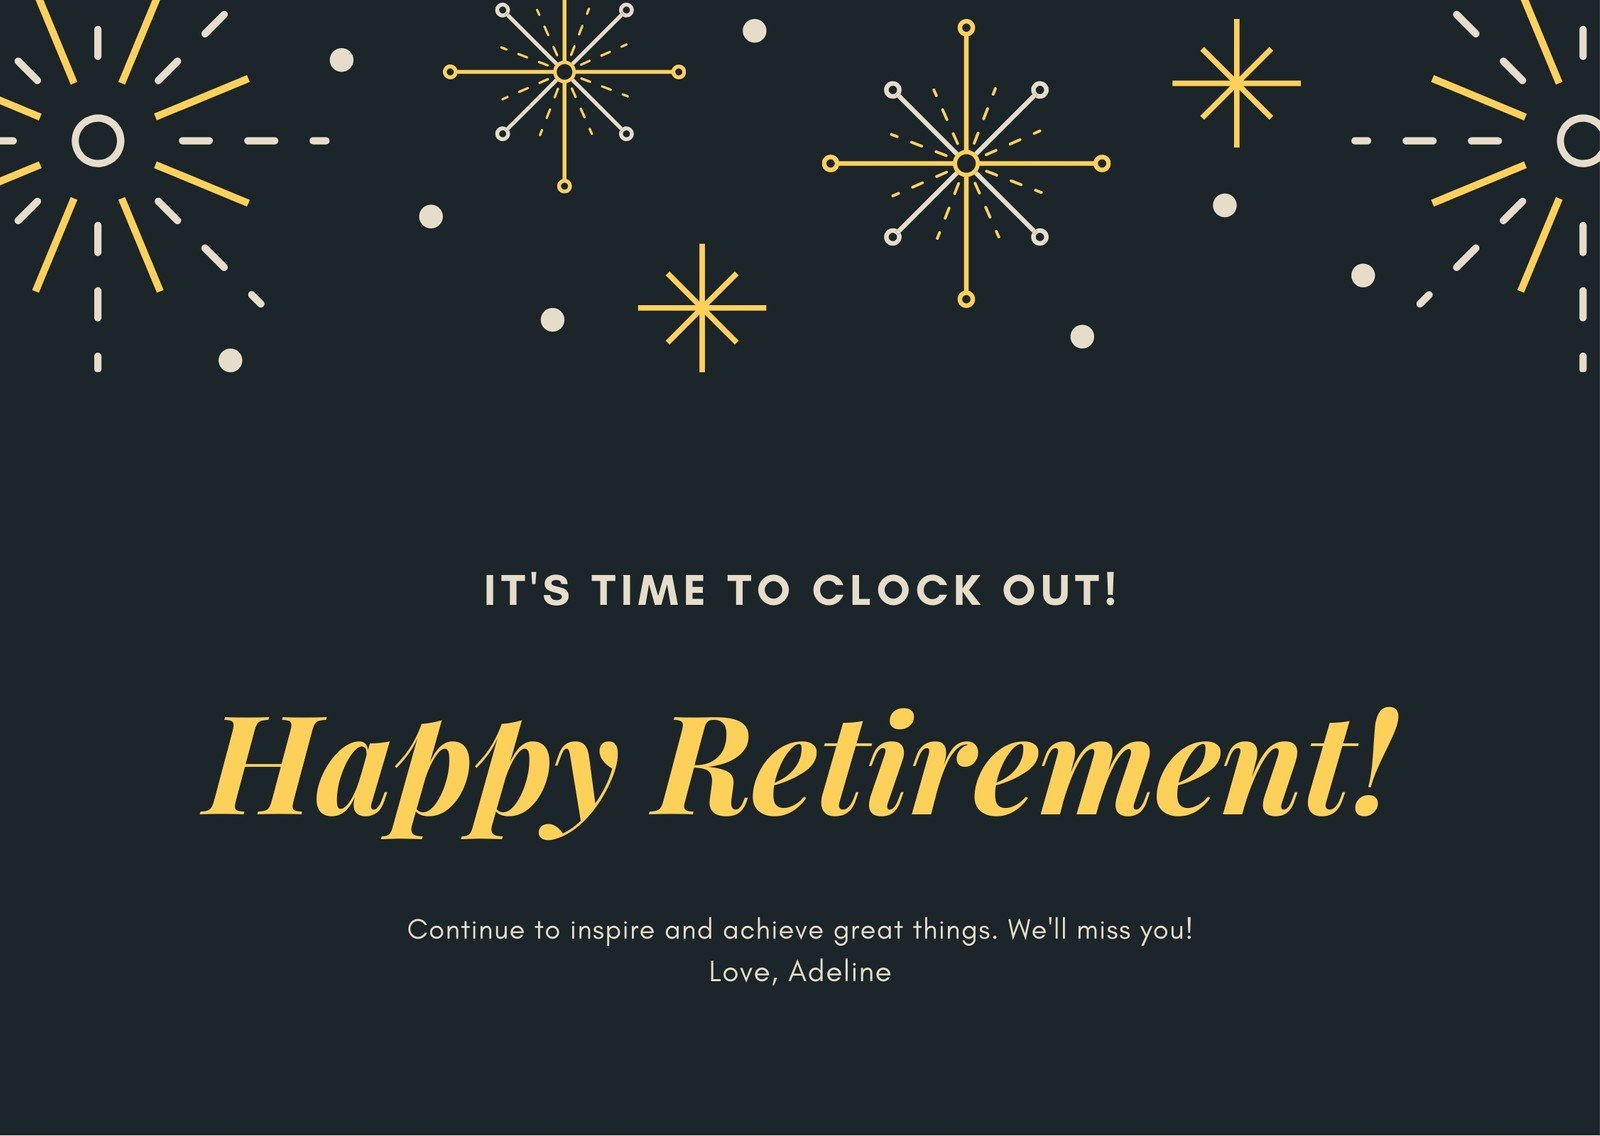 Free printable, customizable retirement card templates  Canva With Free Retirement Flyer Templates